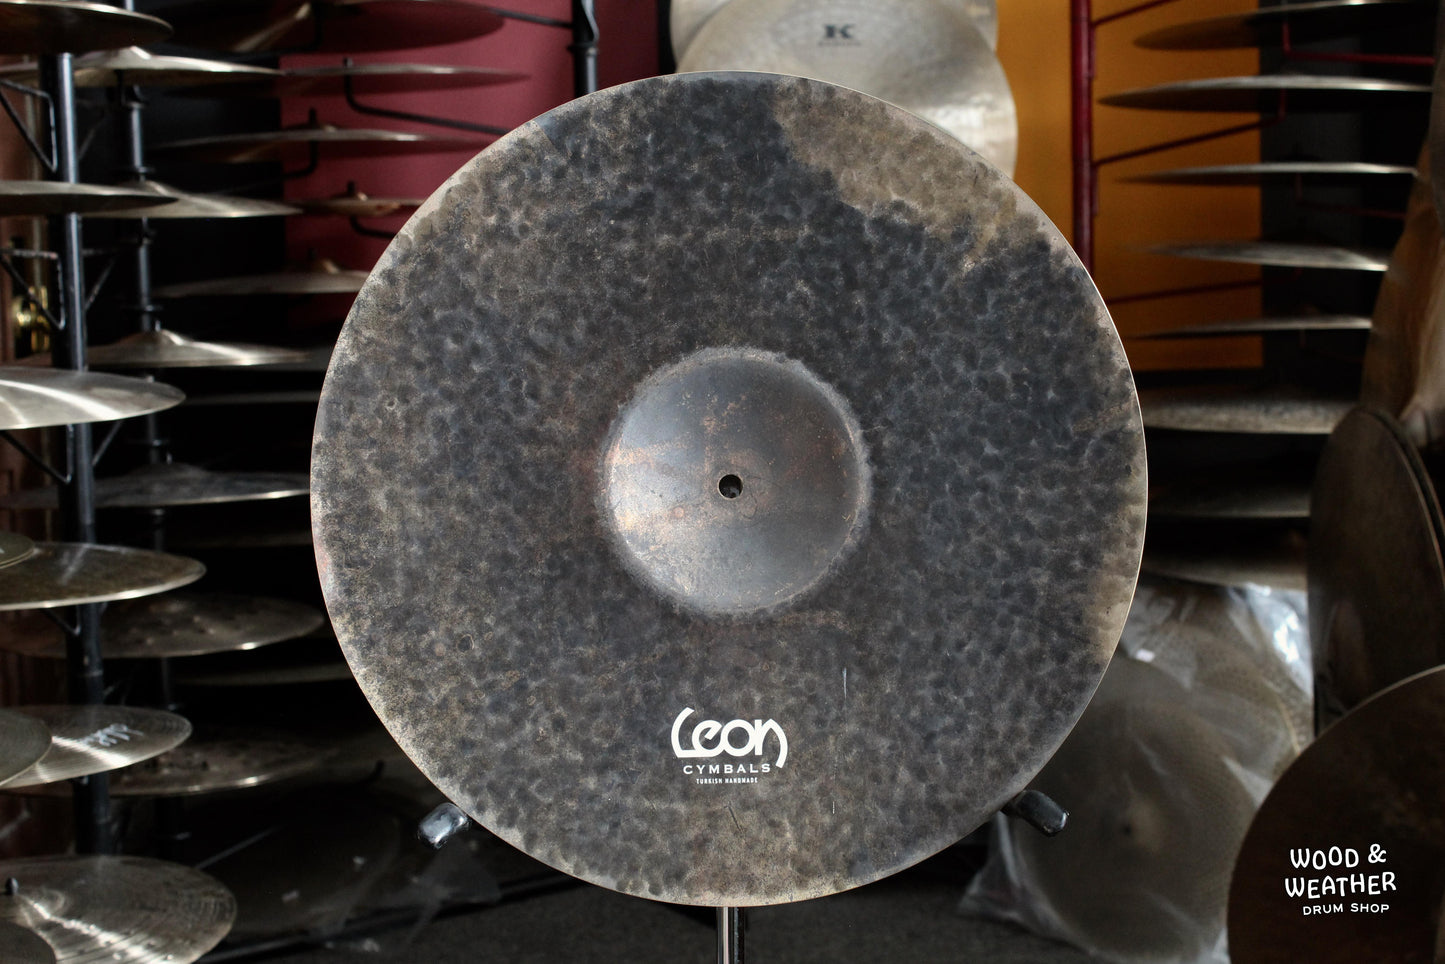 Leon Cymbals 17" Dark Crash Cymbal 1210g